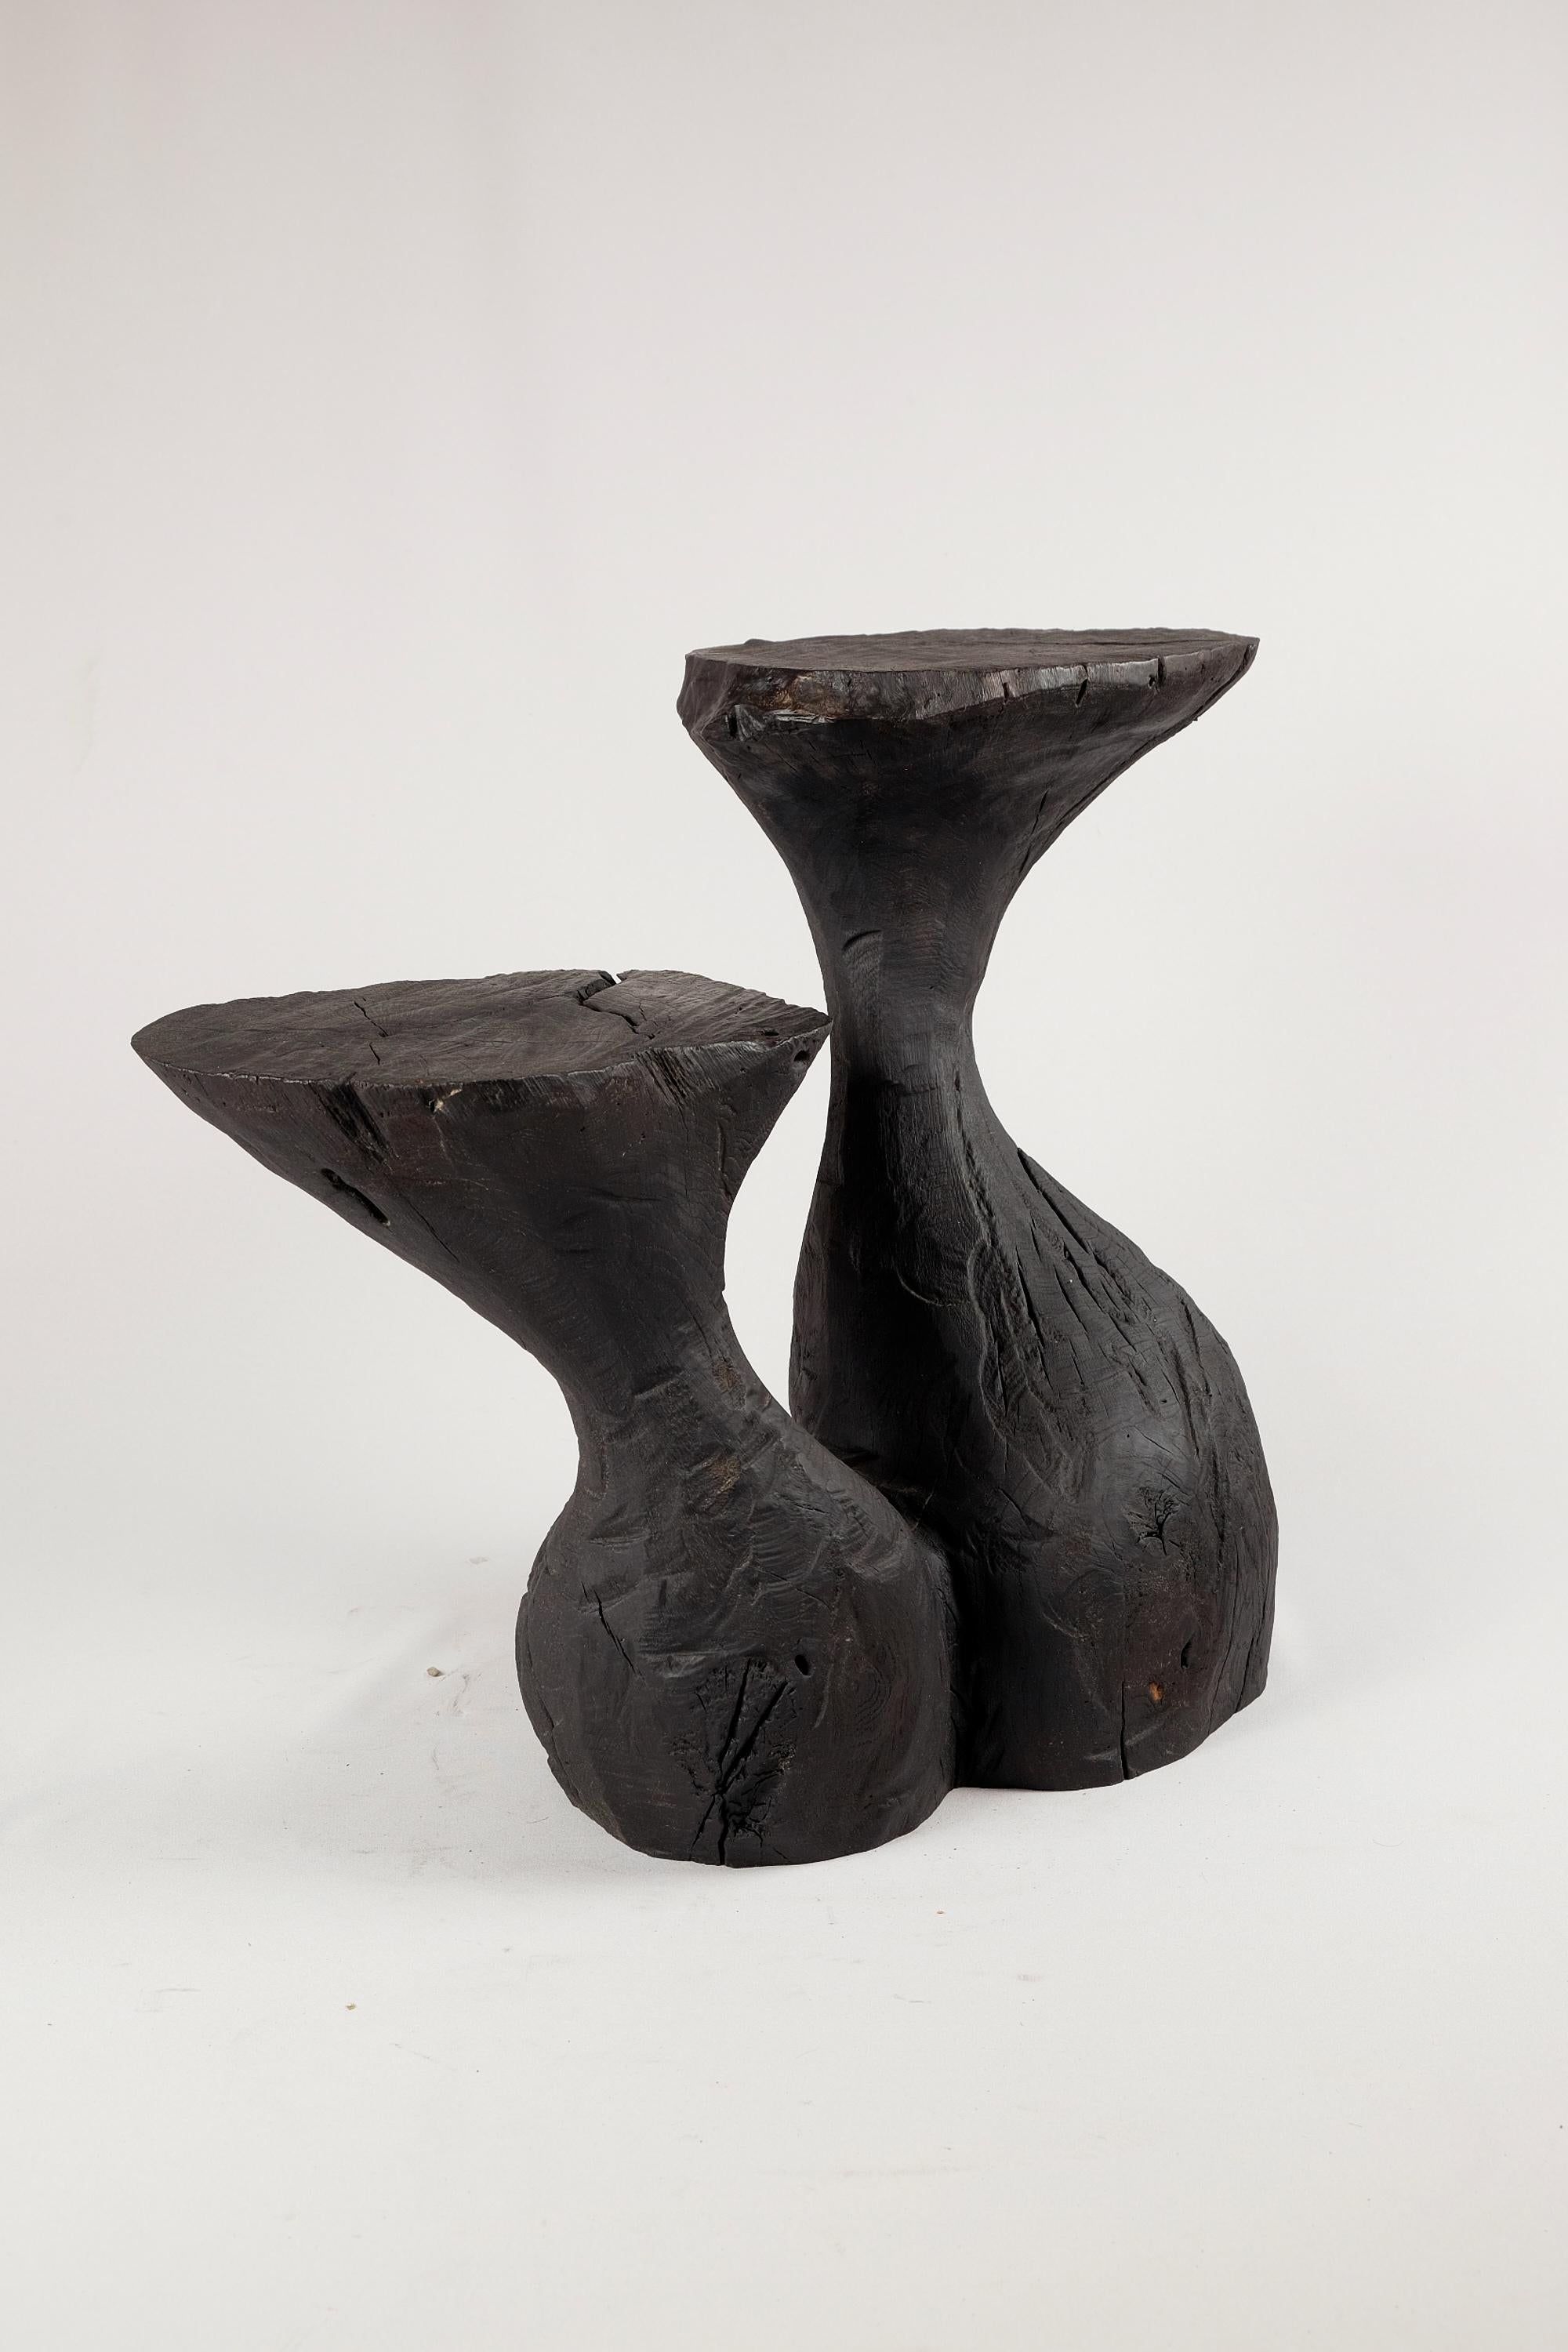 Solid Burnt Wood, Sculptural Side Table, Original Contemporary Design, Logniture 4